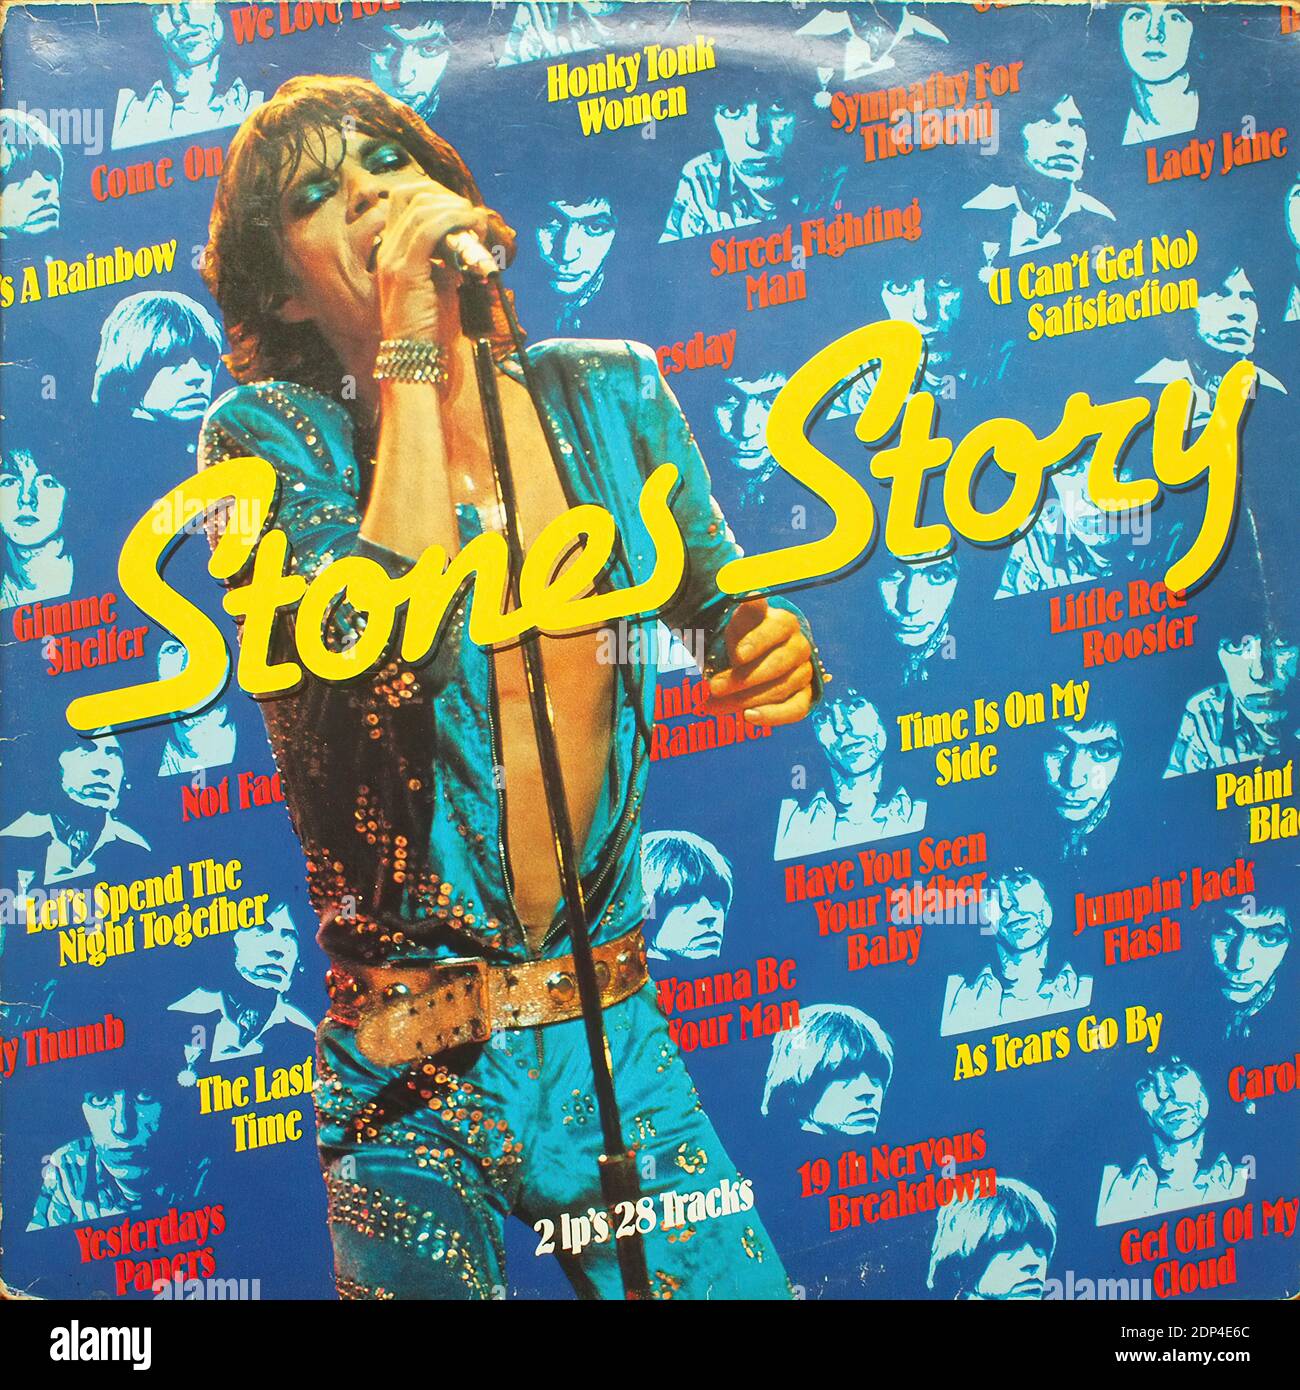 Rolling Stones - Stones Story, Decca 6645 407, 2LP - Vintage vinyl album cover Stock Photo